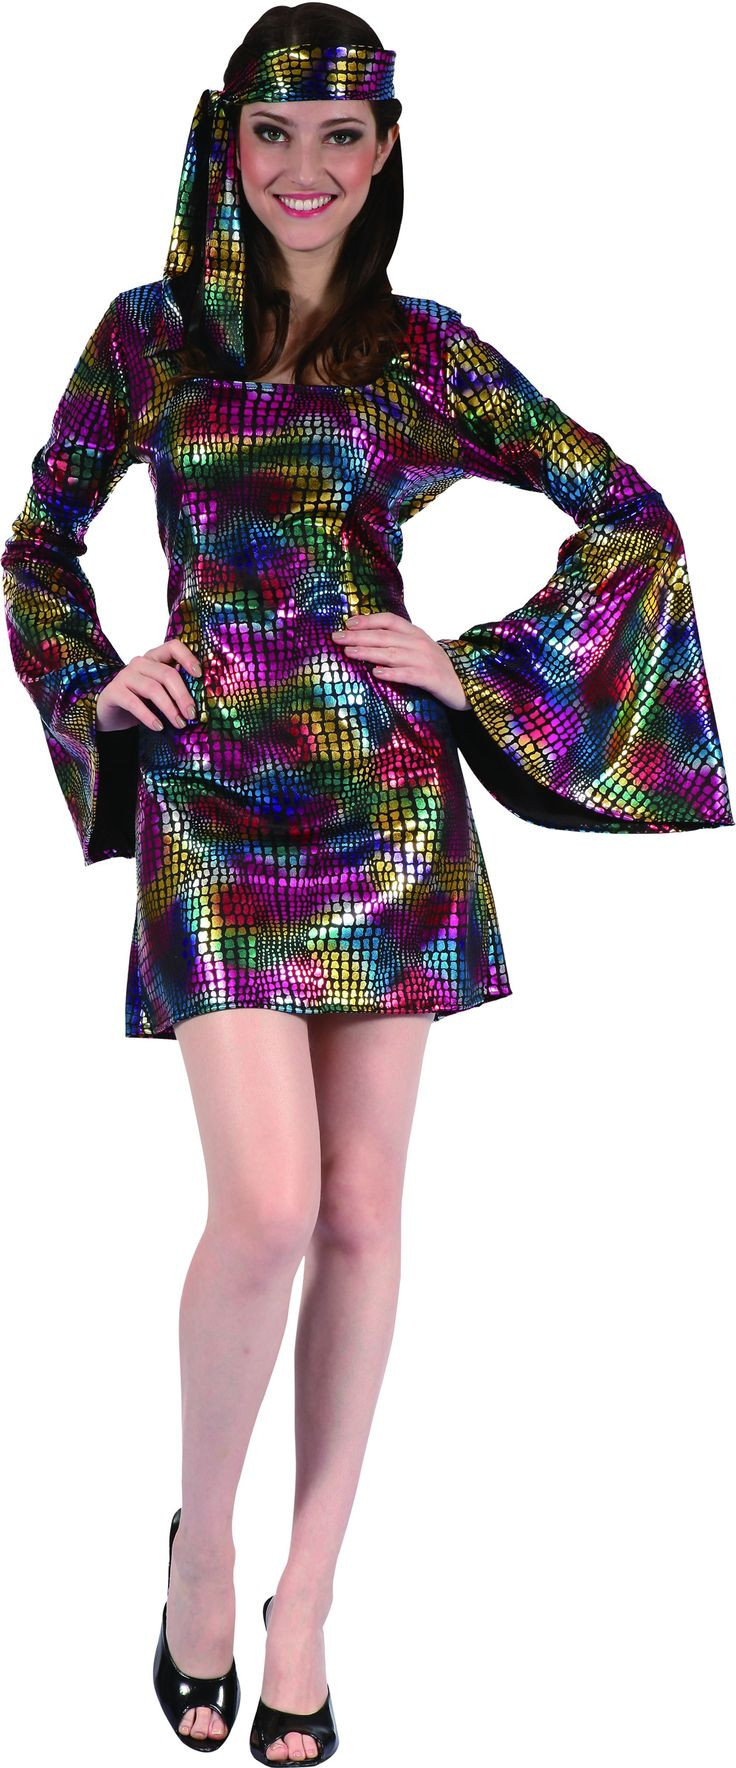 DIY 70S Costume
 Best 10 Disco costume ideas on Pinterest